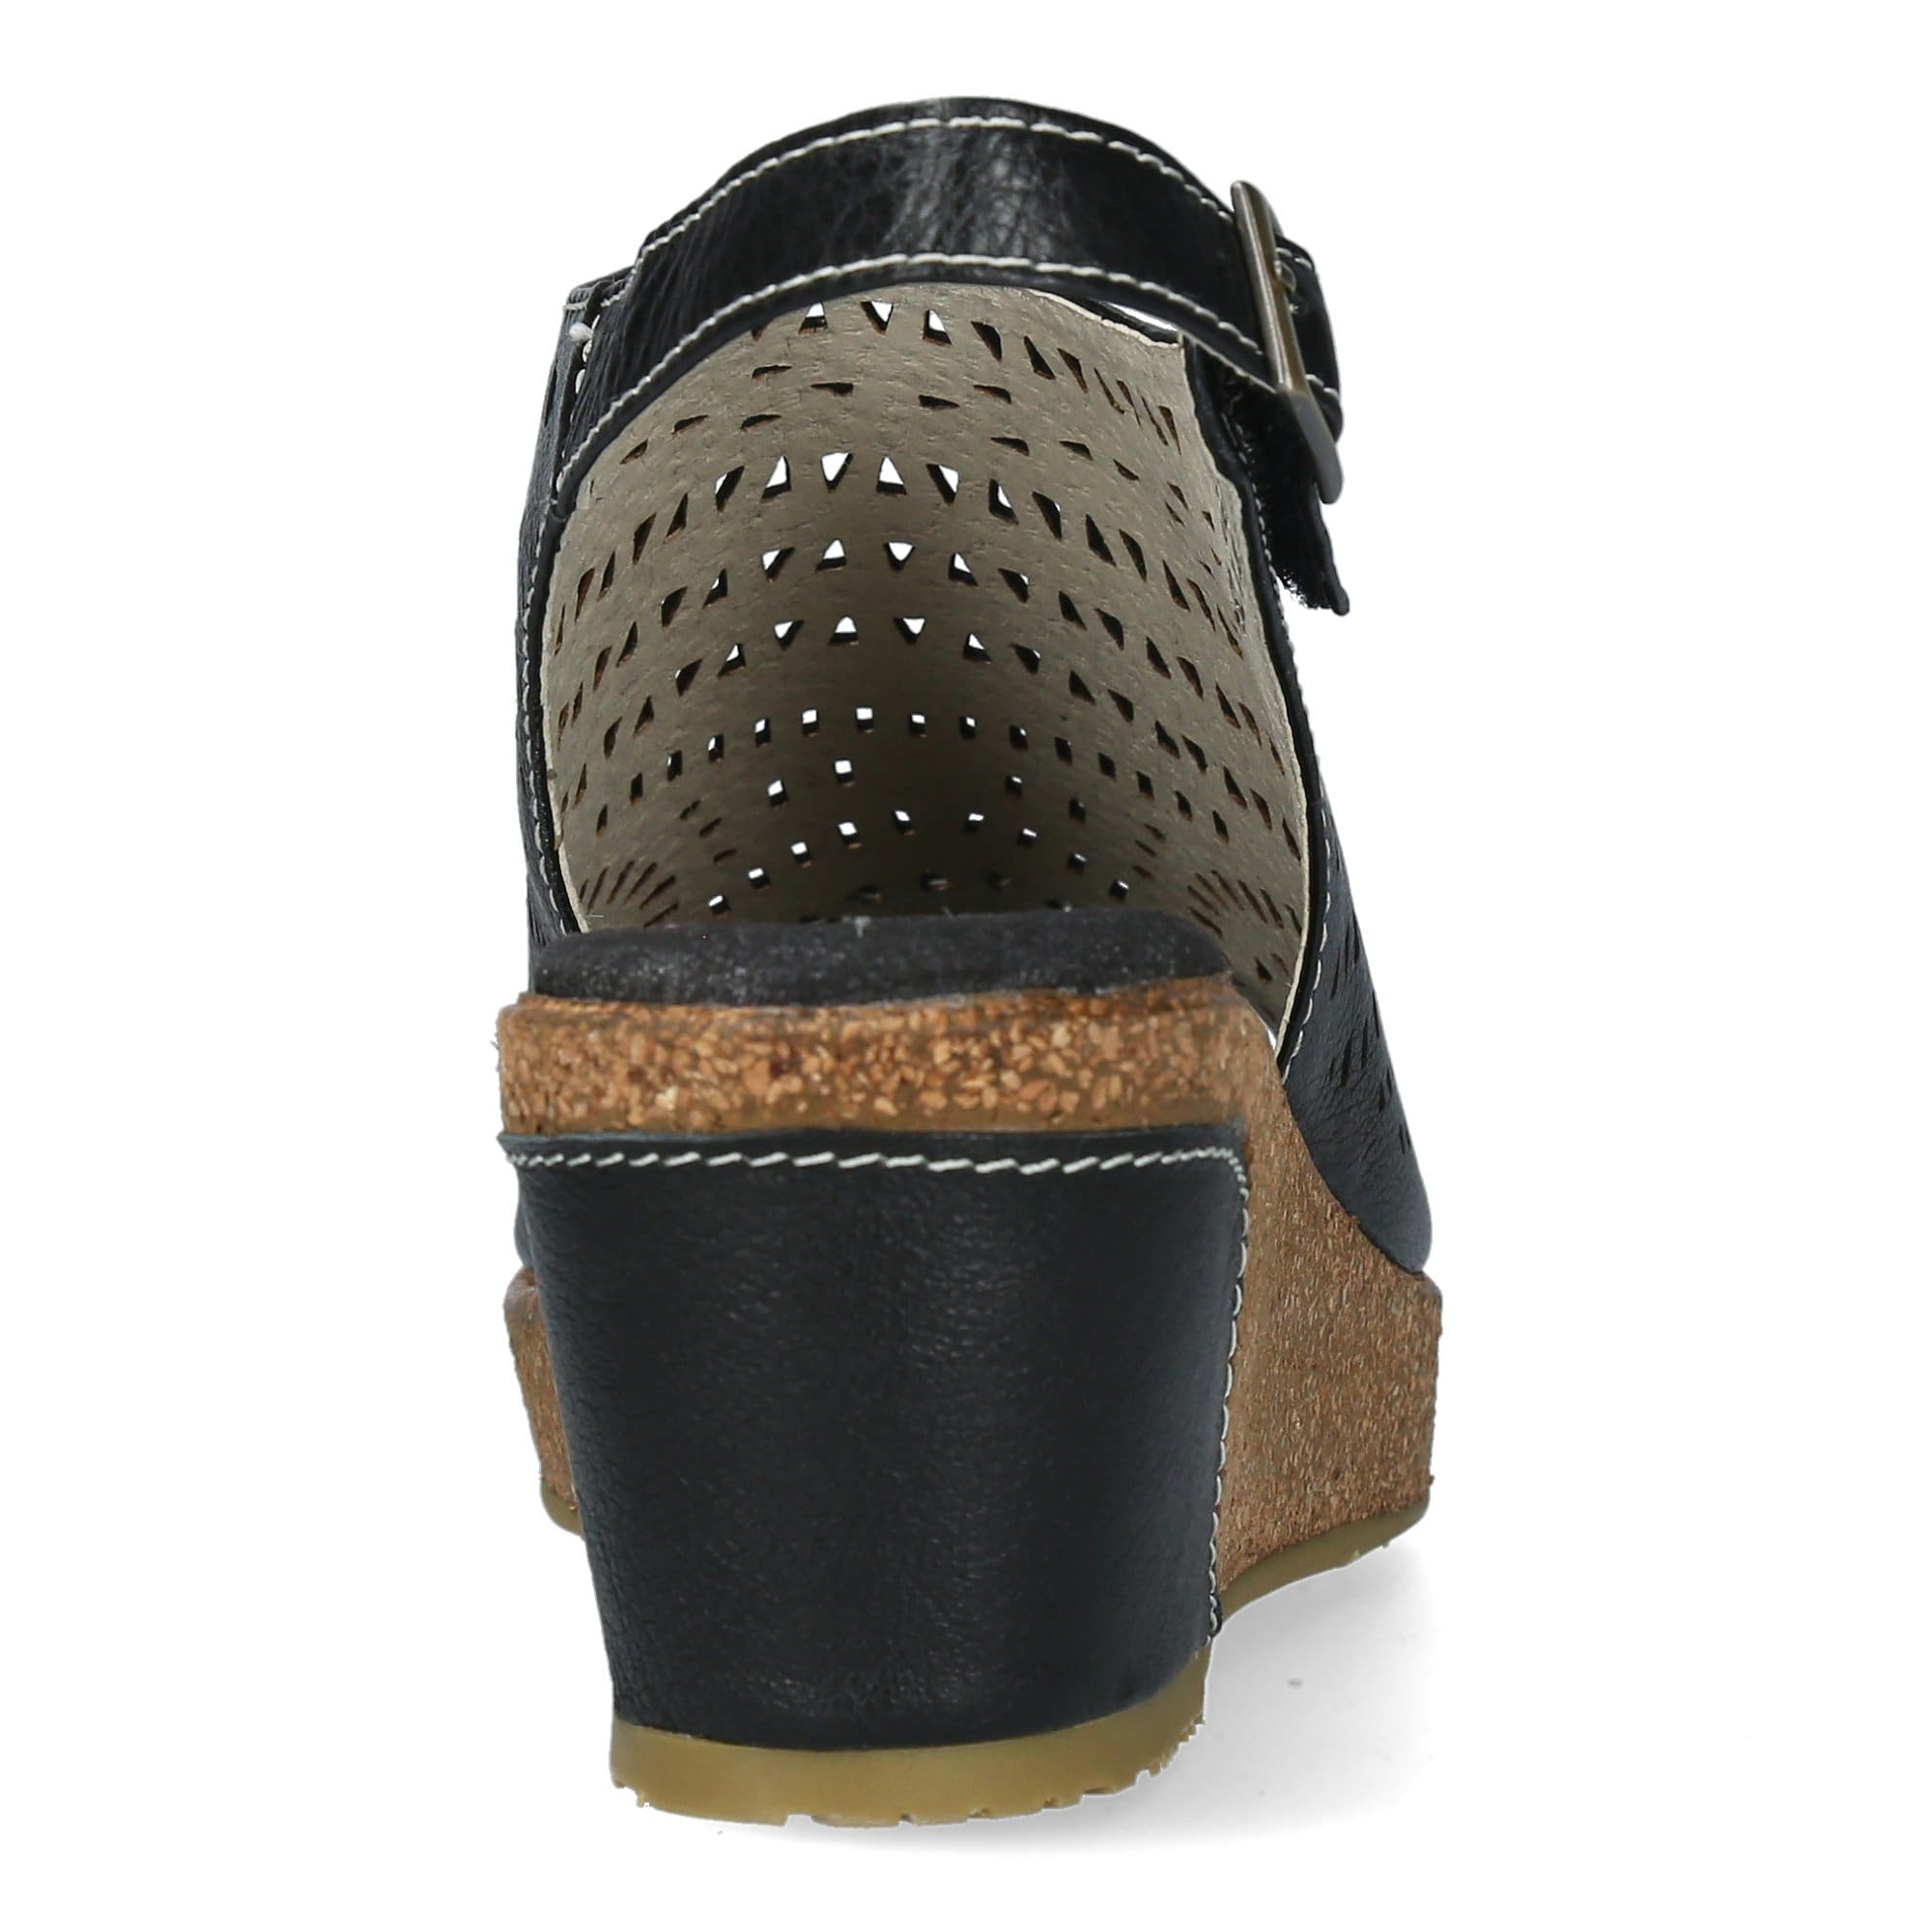 HACLEO 10 Shoes - Sandal